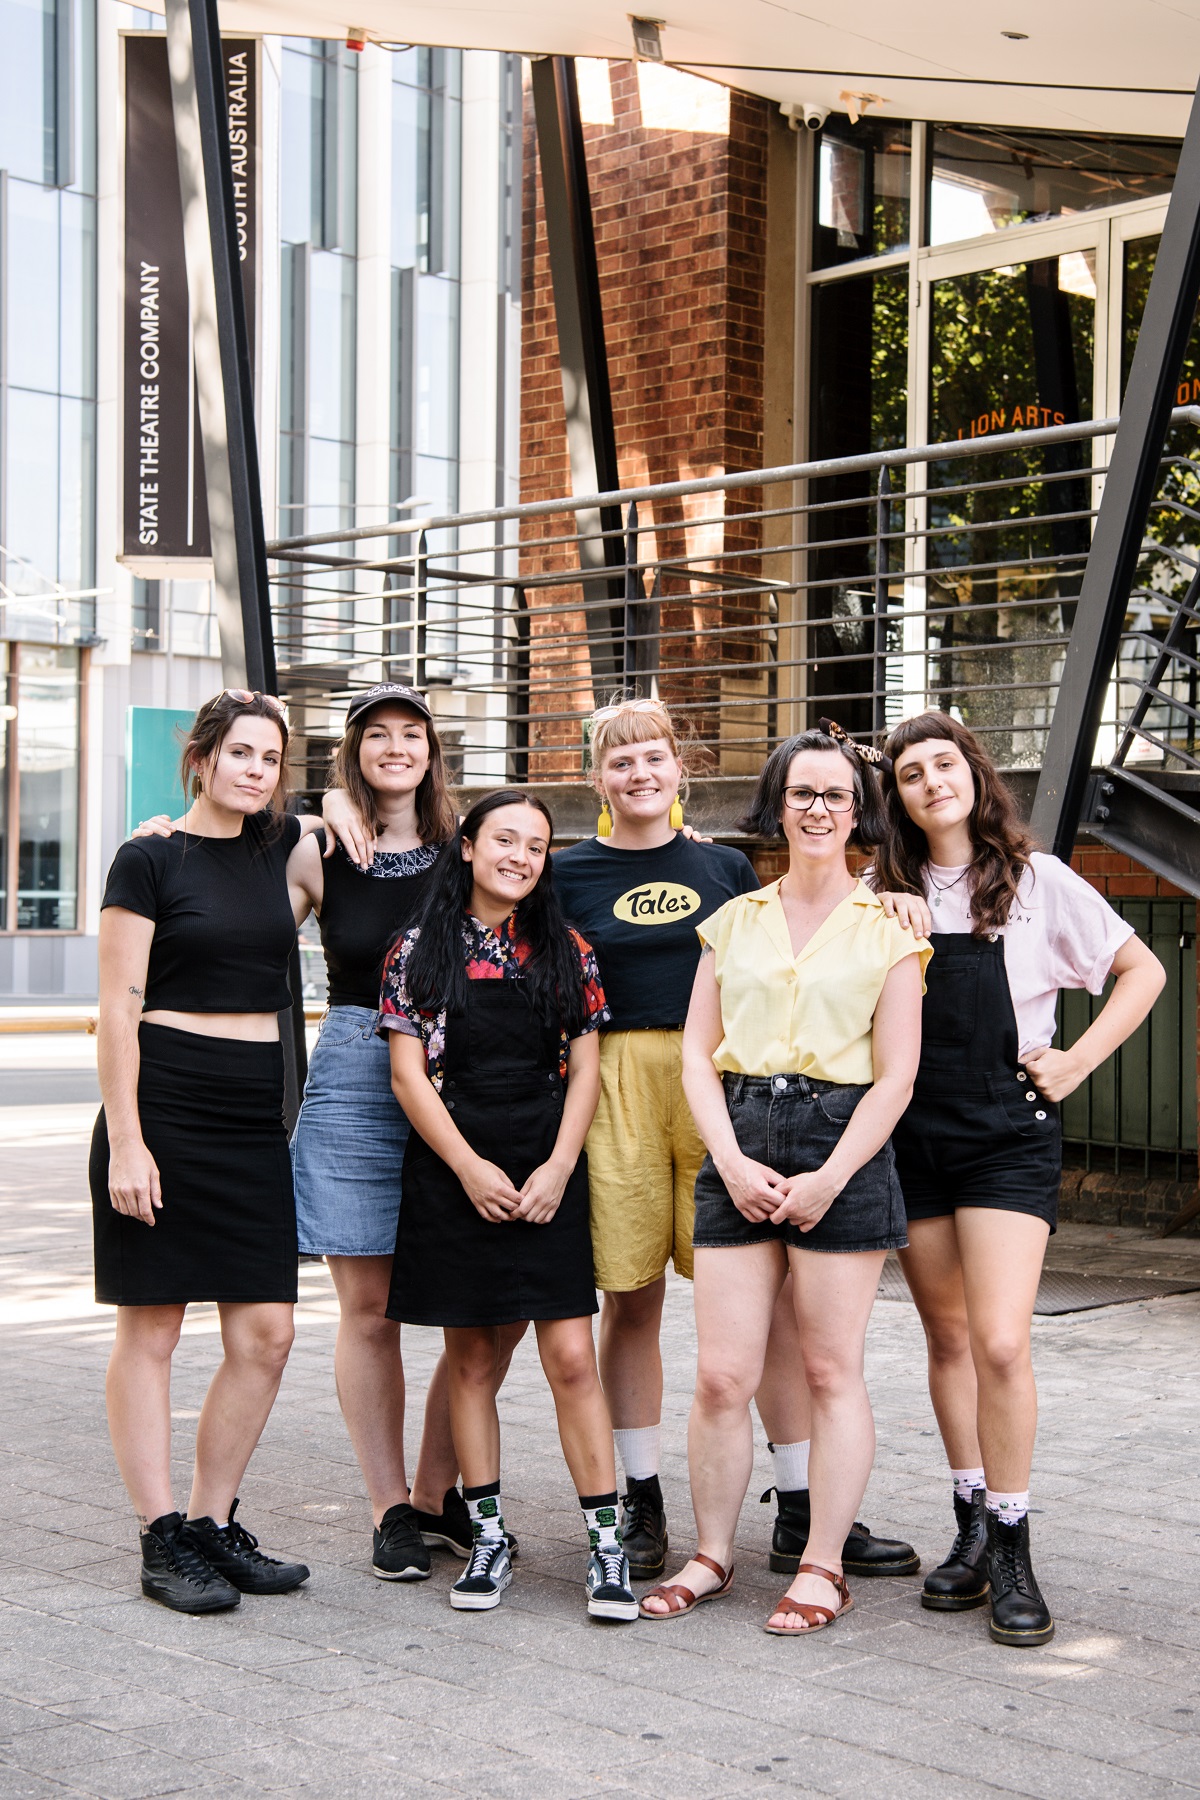 The team behind Girls Rock! Adelaide